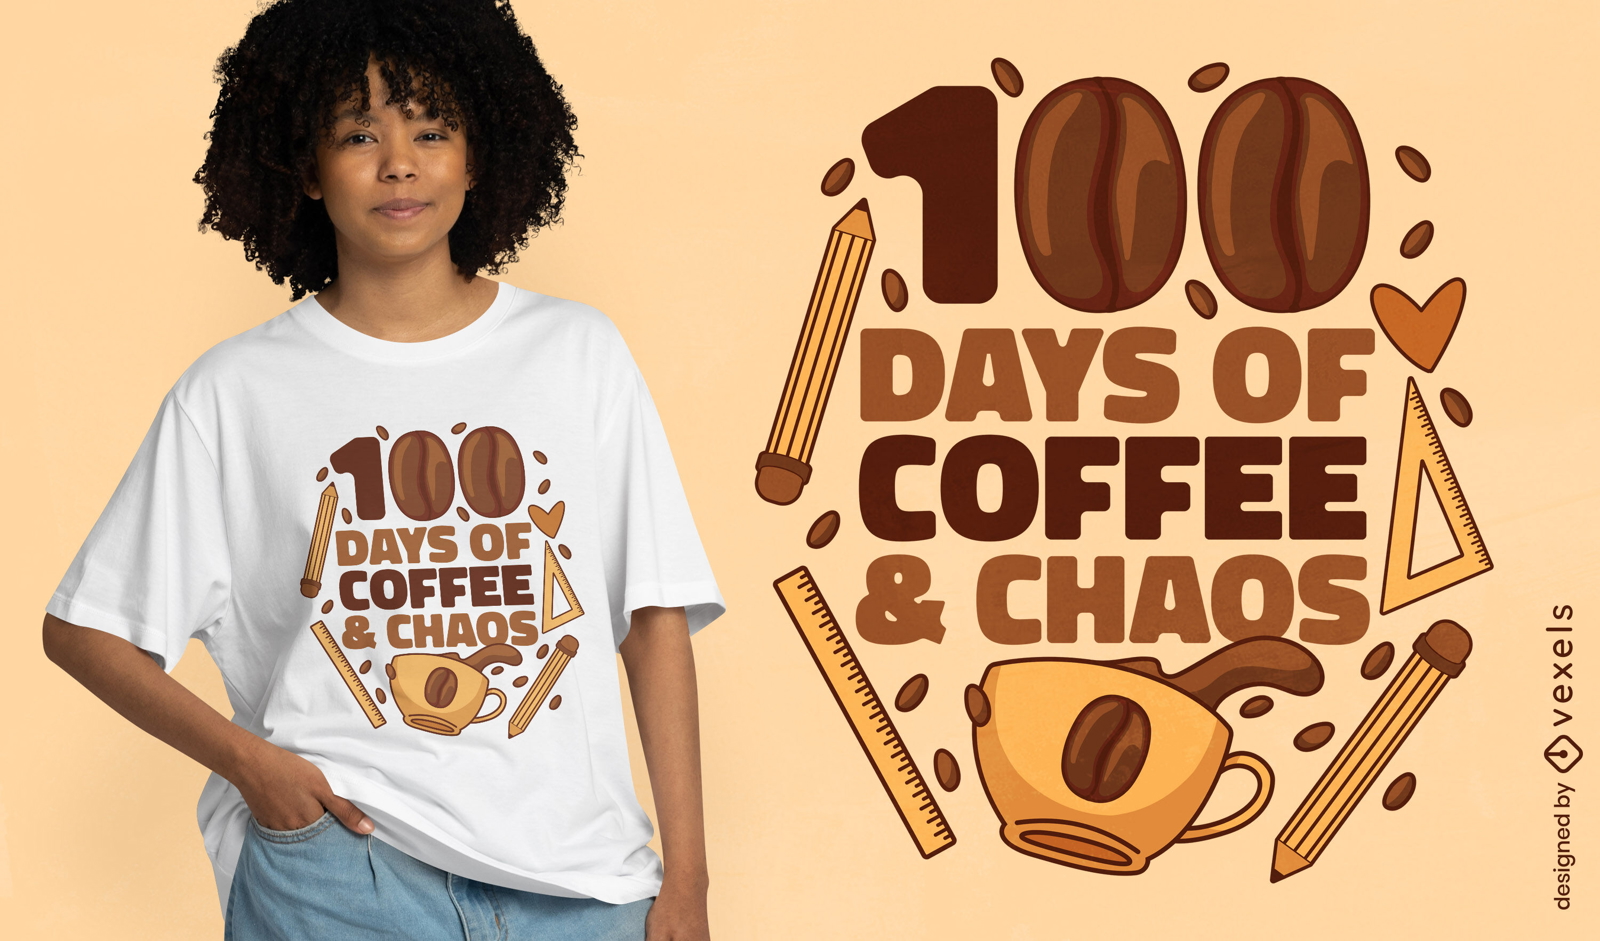 Schulkaffee und Chaos-T-Shirt-Design